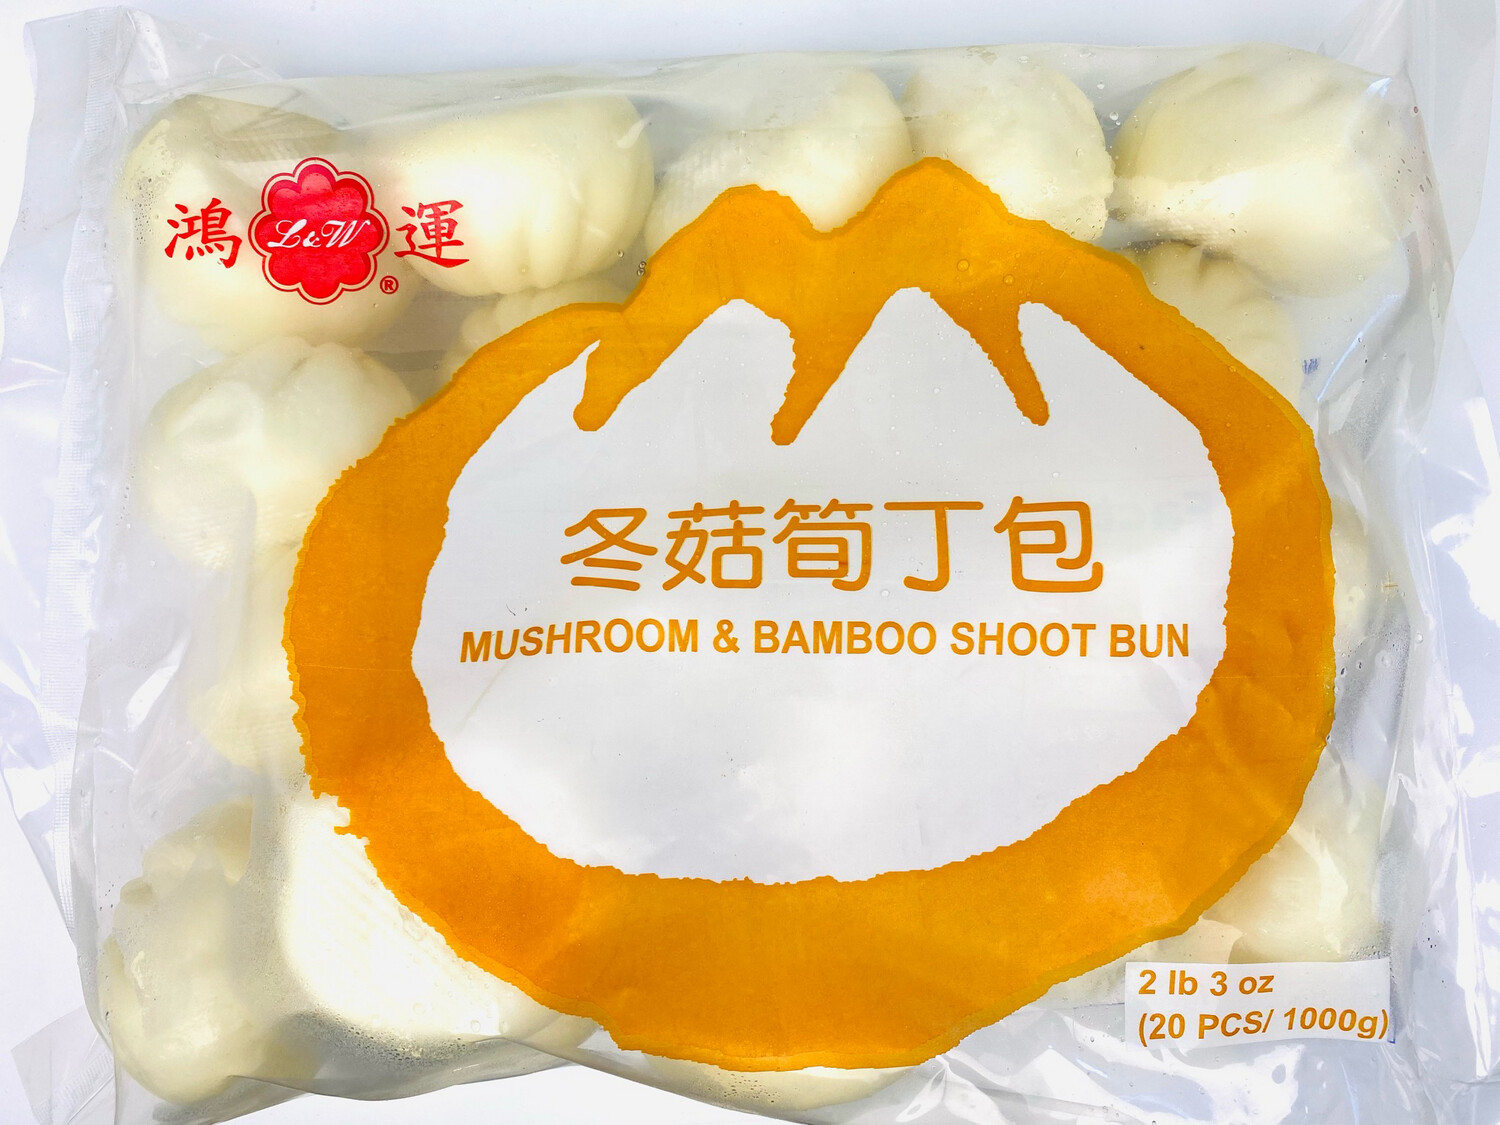 L&W Mushroom and Bamboo shoot bun 2lbs 鸿运 冬菇笋丁包 (散装20个) 本周特价